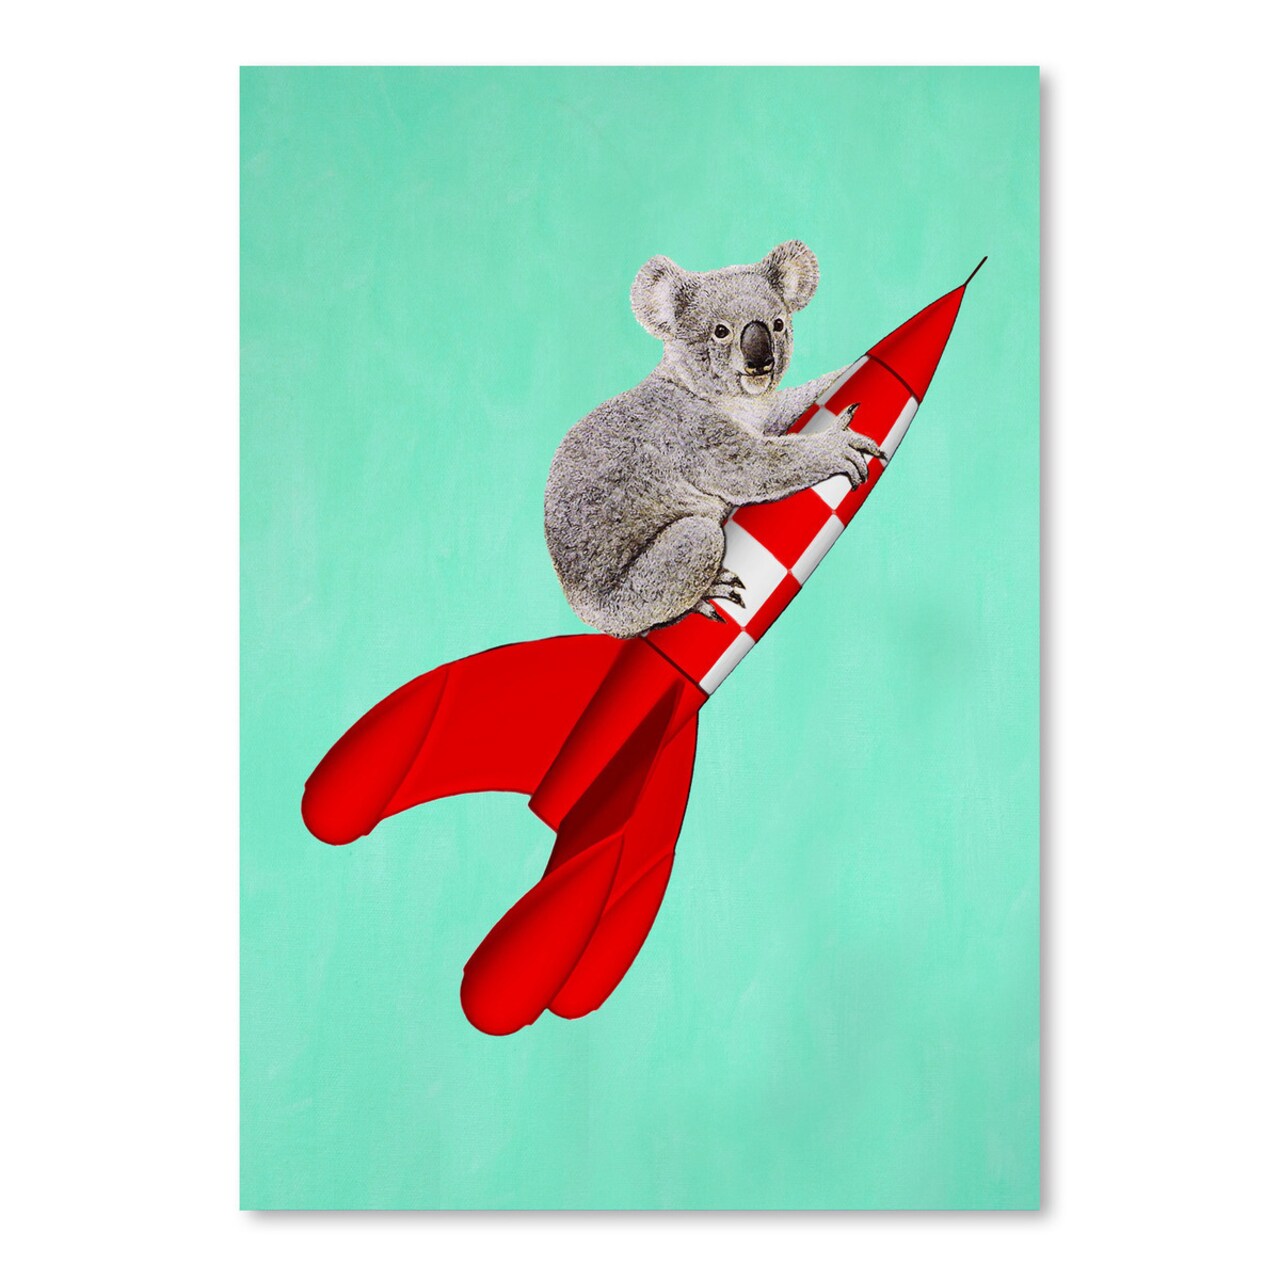 Koala On Rocket by Coco De Paris  Poster Art Print - Americanflat